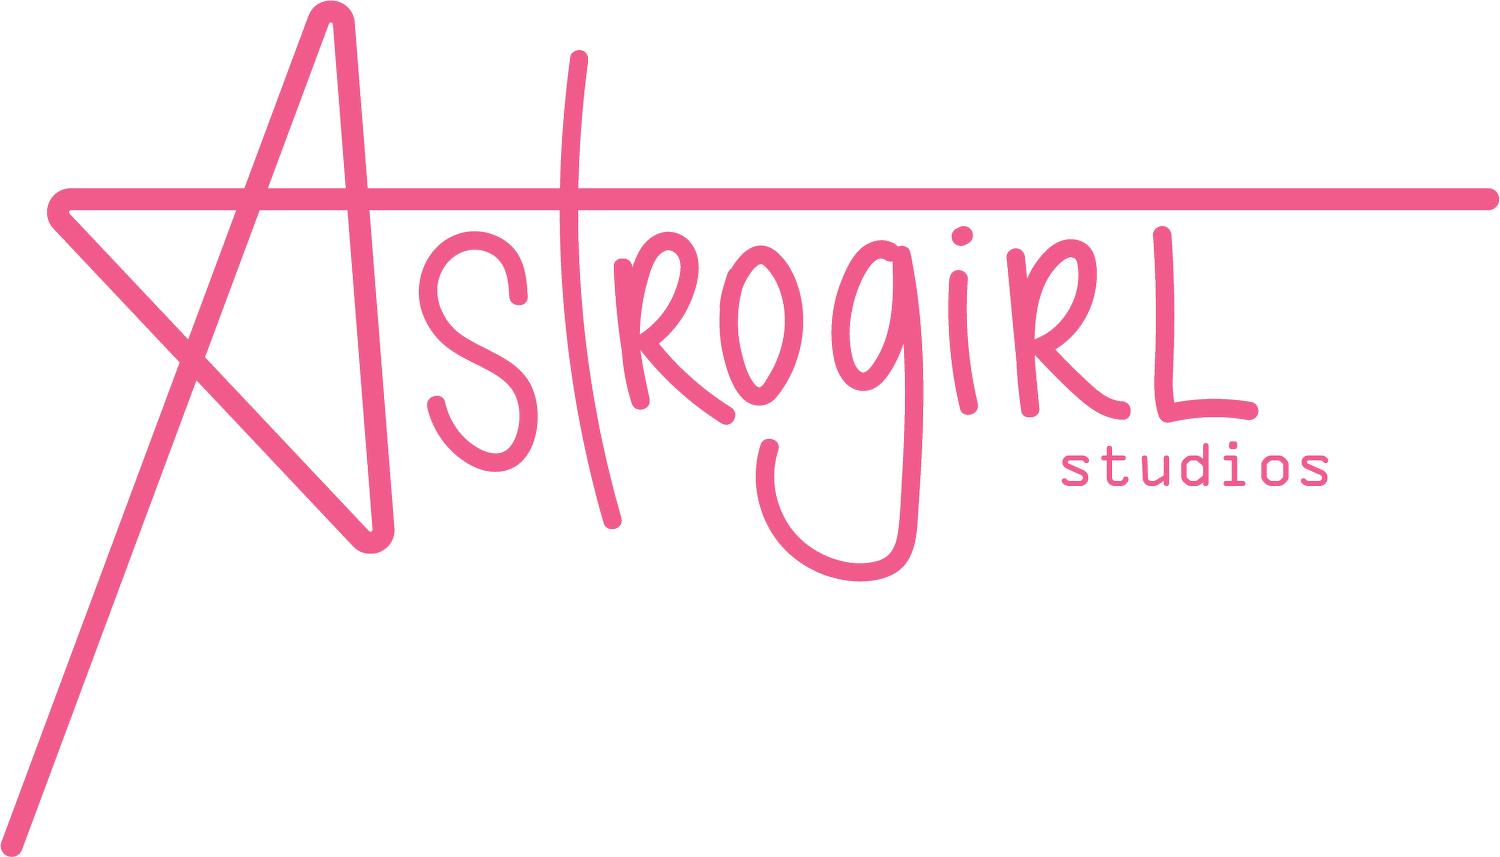 Astrogirl Studios